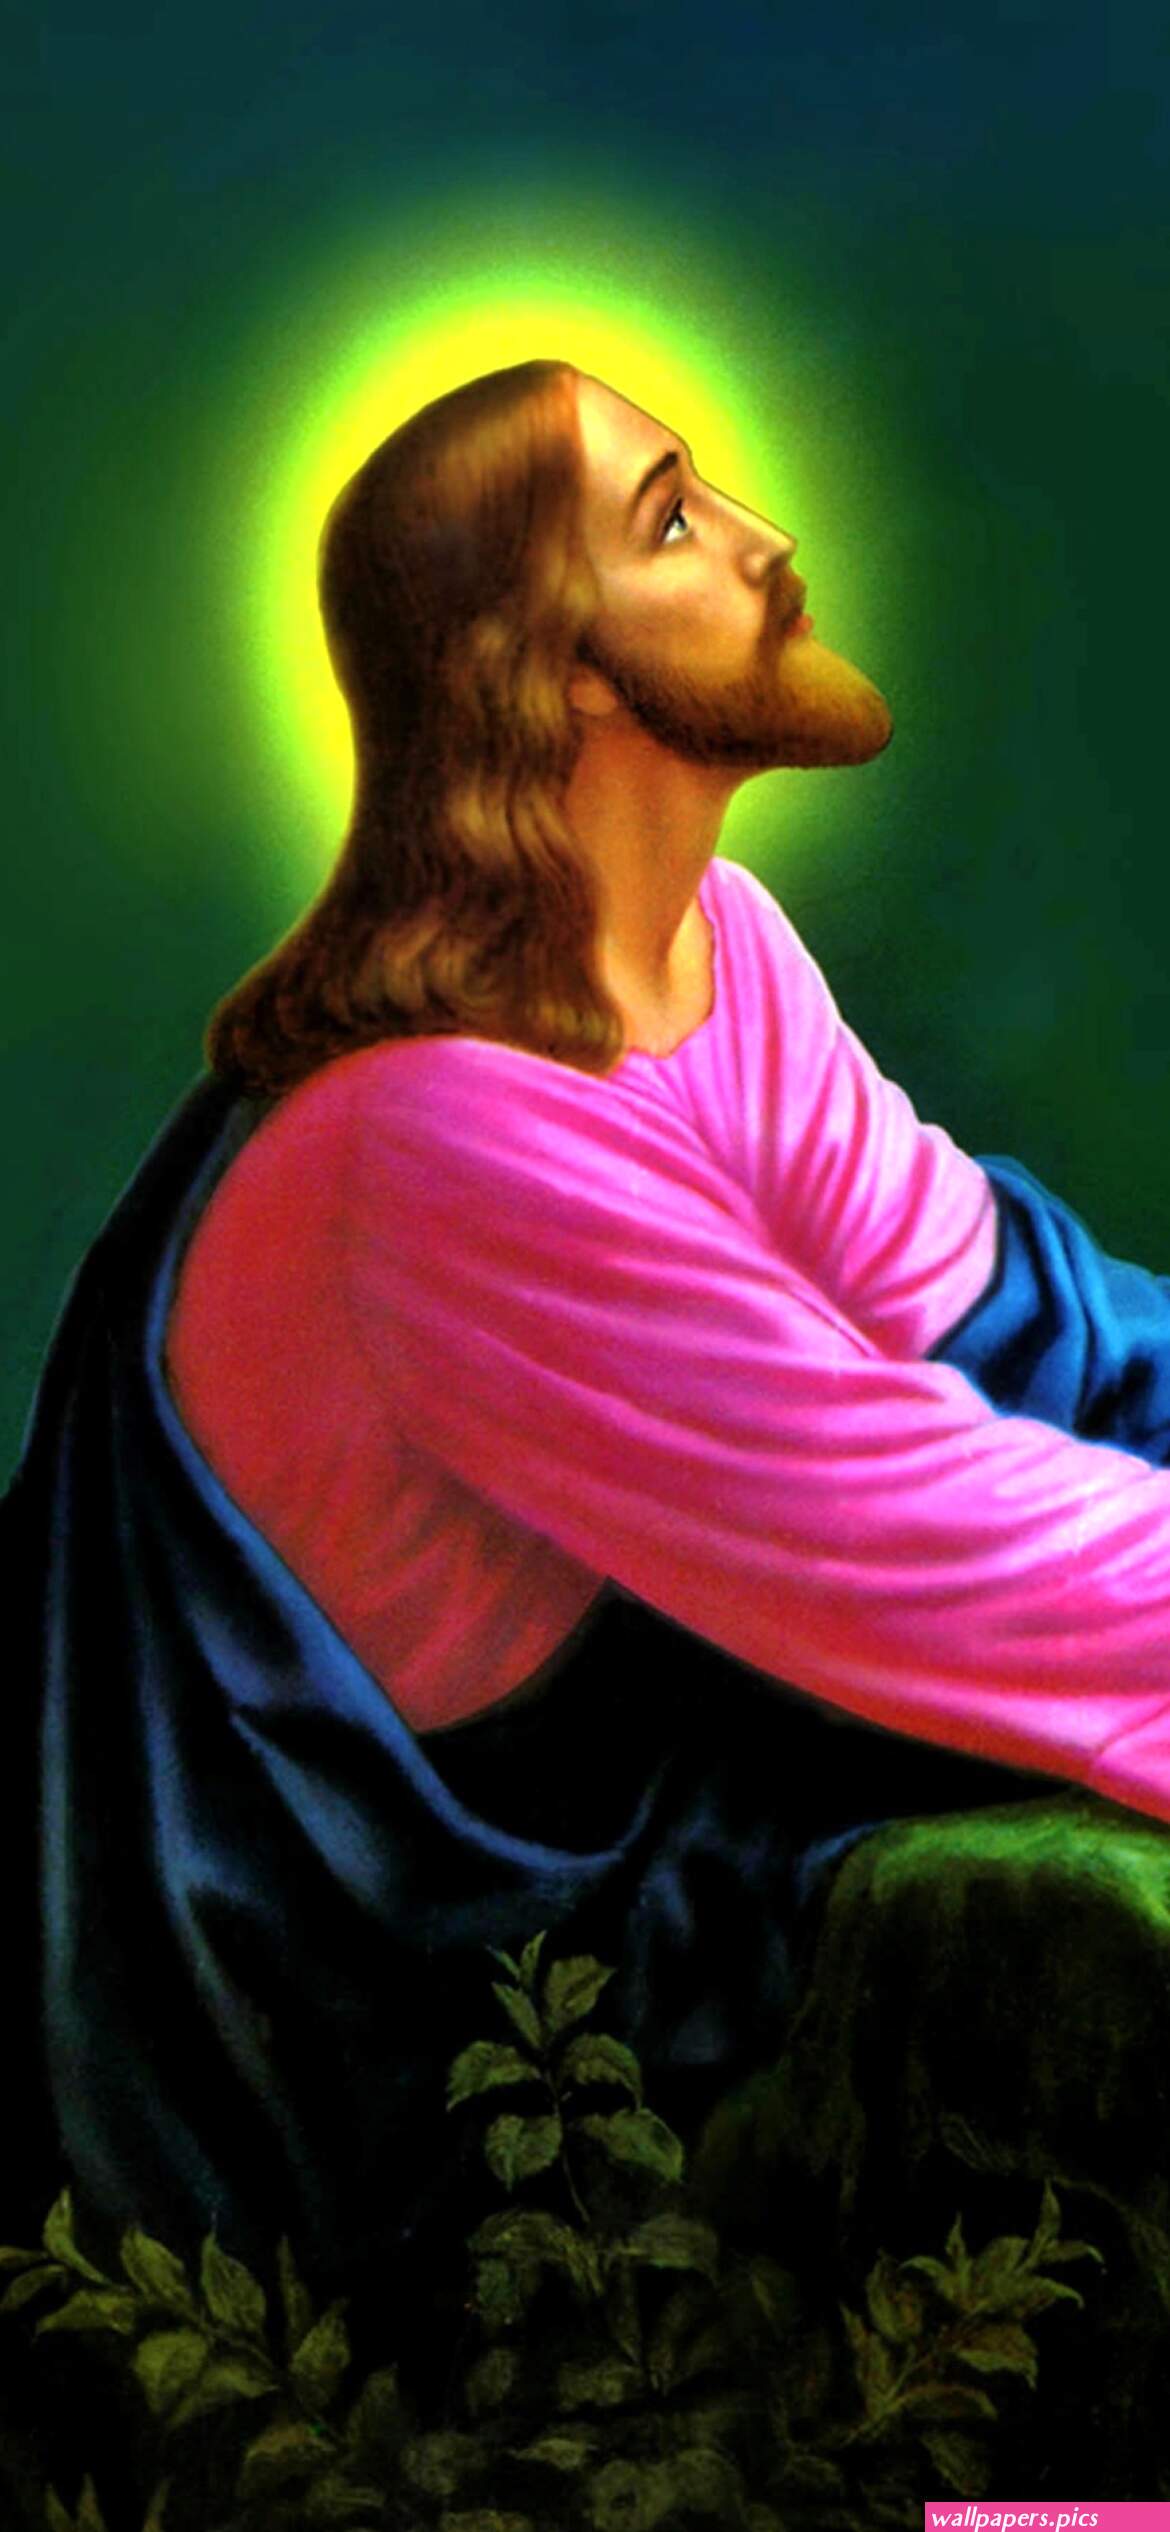 Jesus Prayer Wallpaper for iPhone 11 Pro